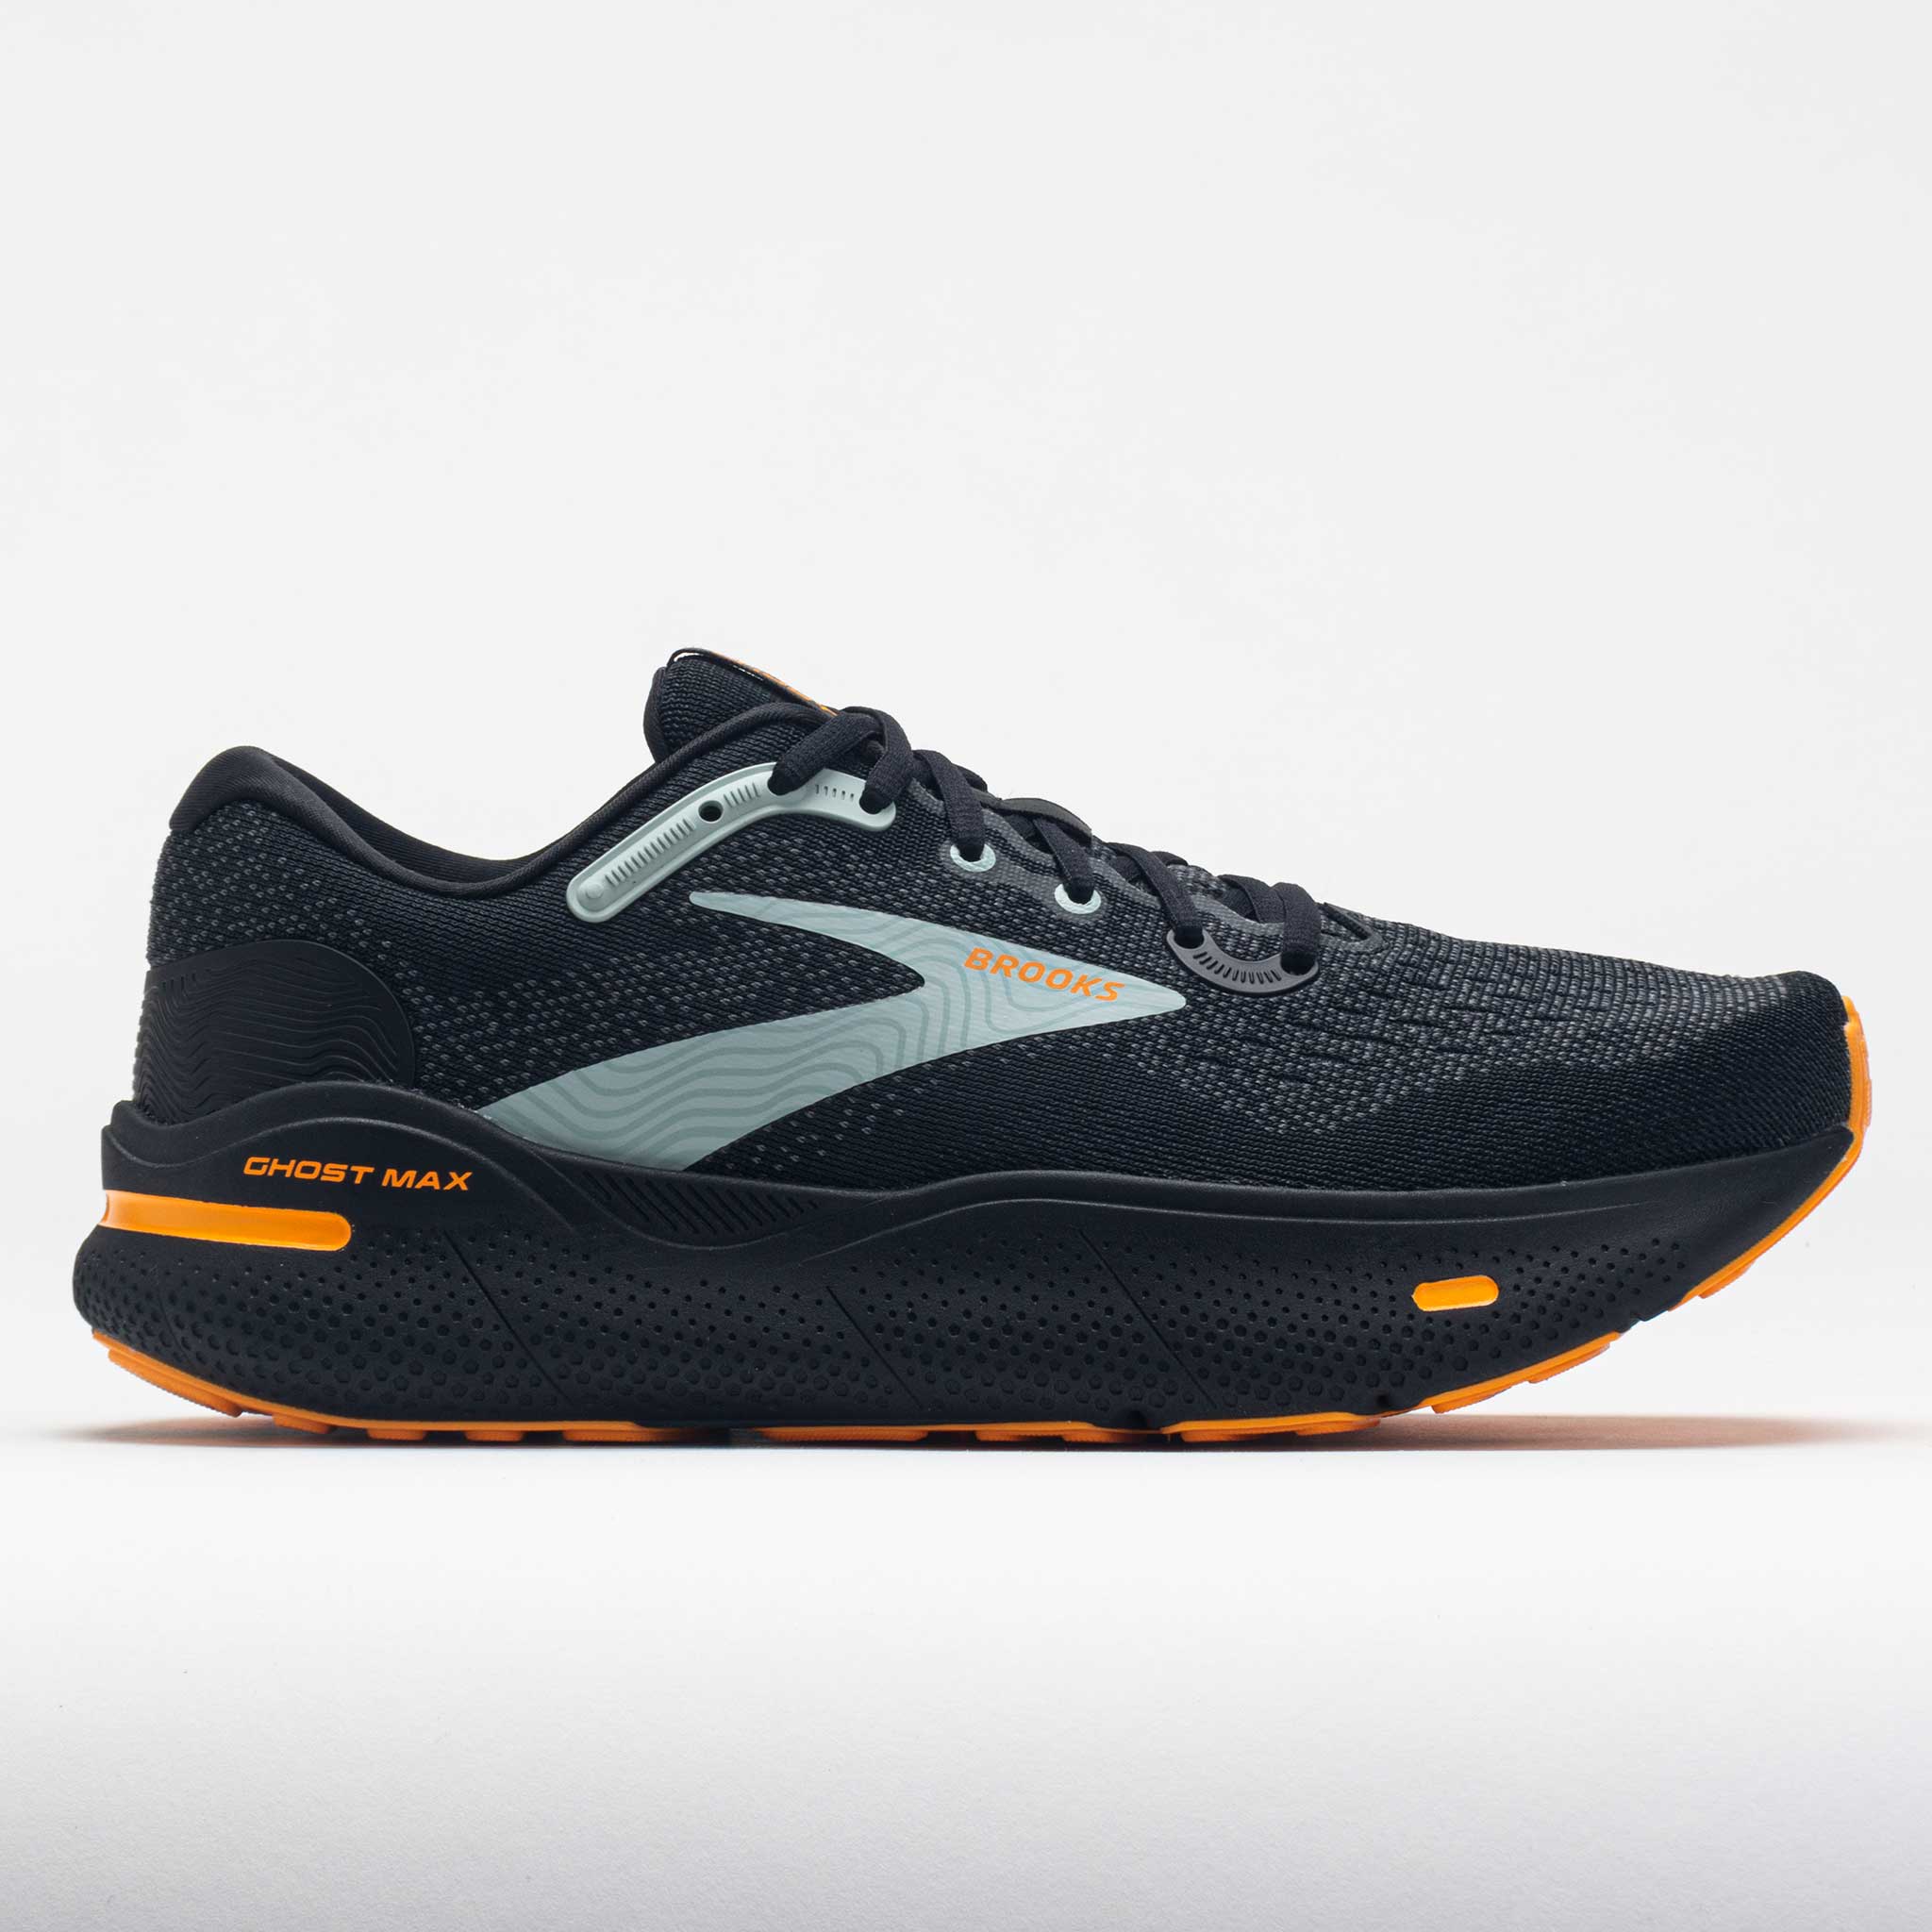 Brooks Ghost Max Men's Running Shoes Black/Orange/Cloud Blue Size 12 Width D - Medium